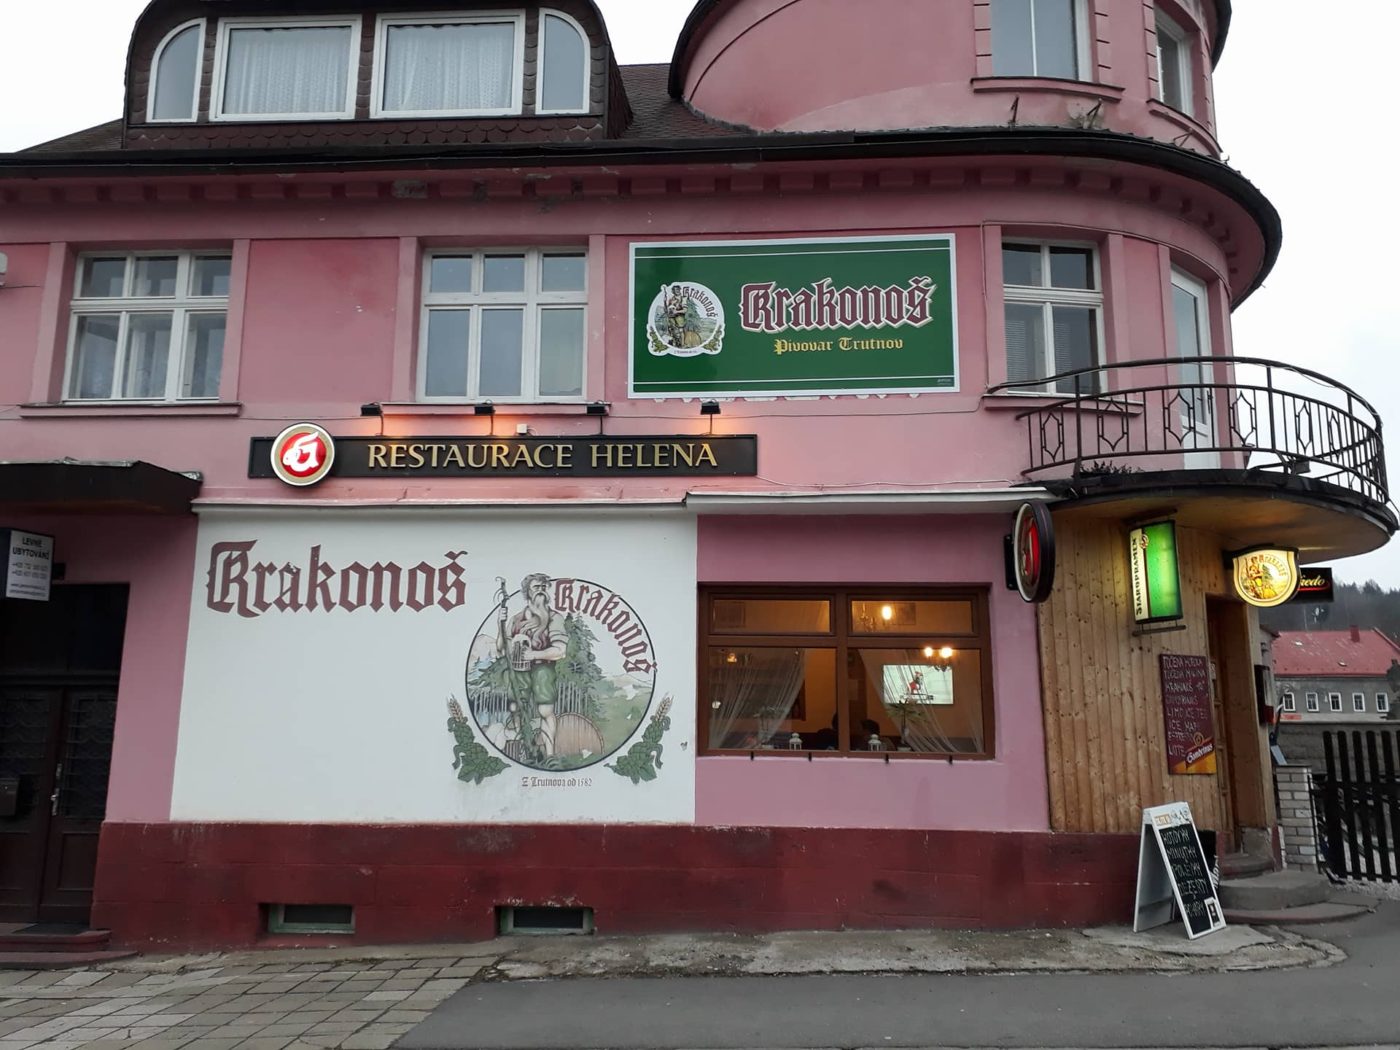 Restaurant Helena in Czech Republic near the ski entrance